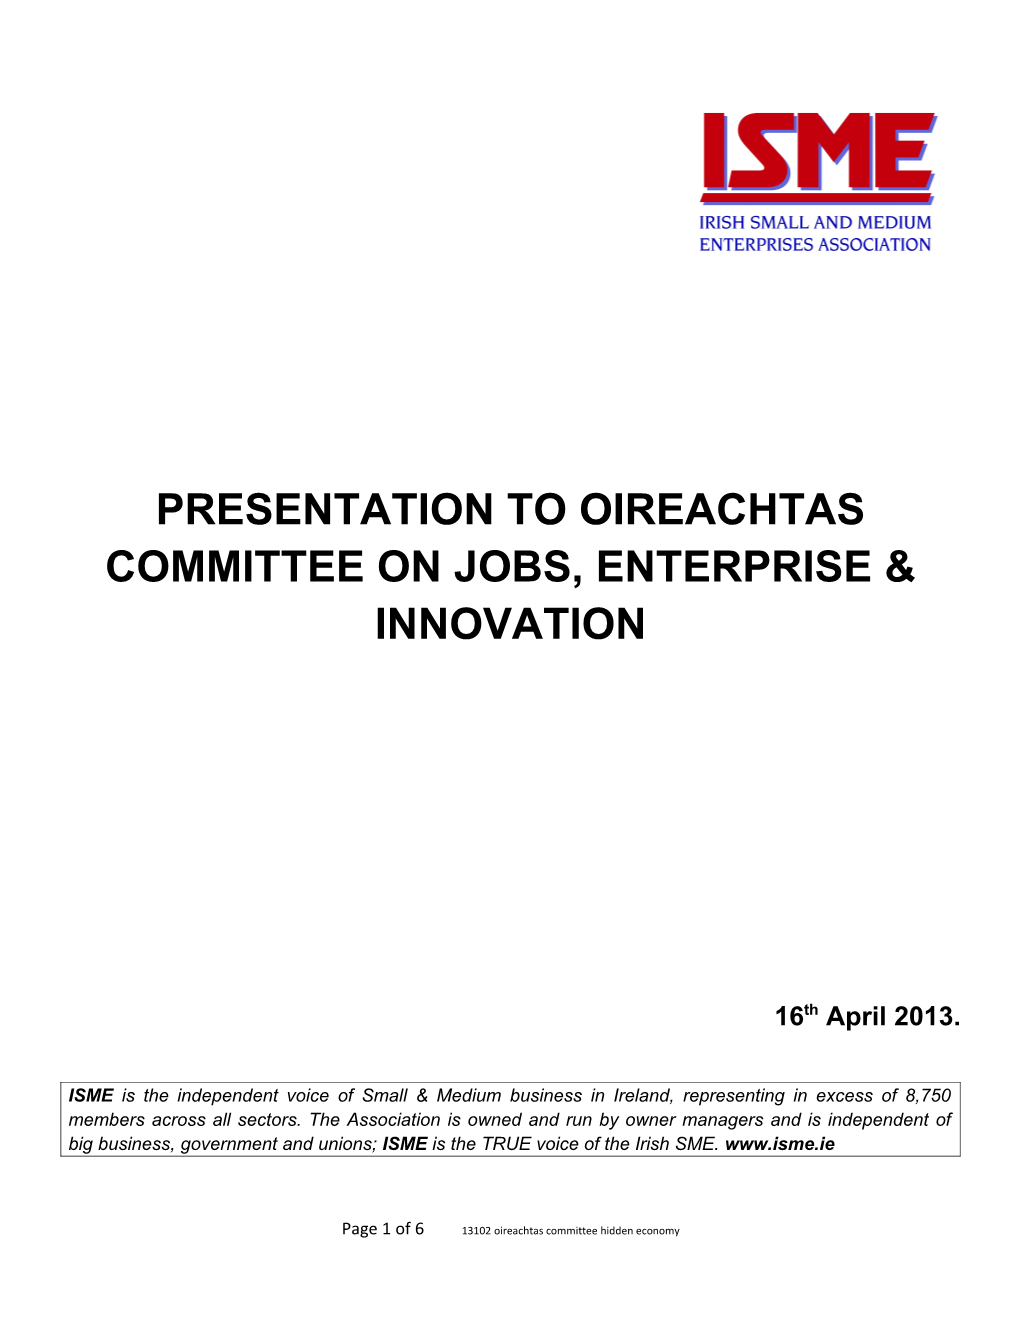 Presentation to Oireachtas Committee on Jobs, Enterprise & Innovation